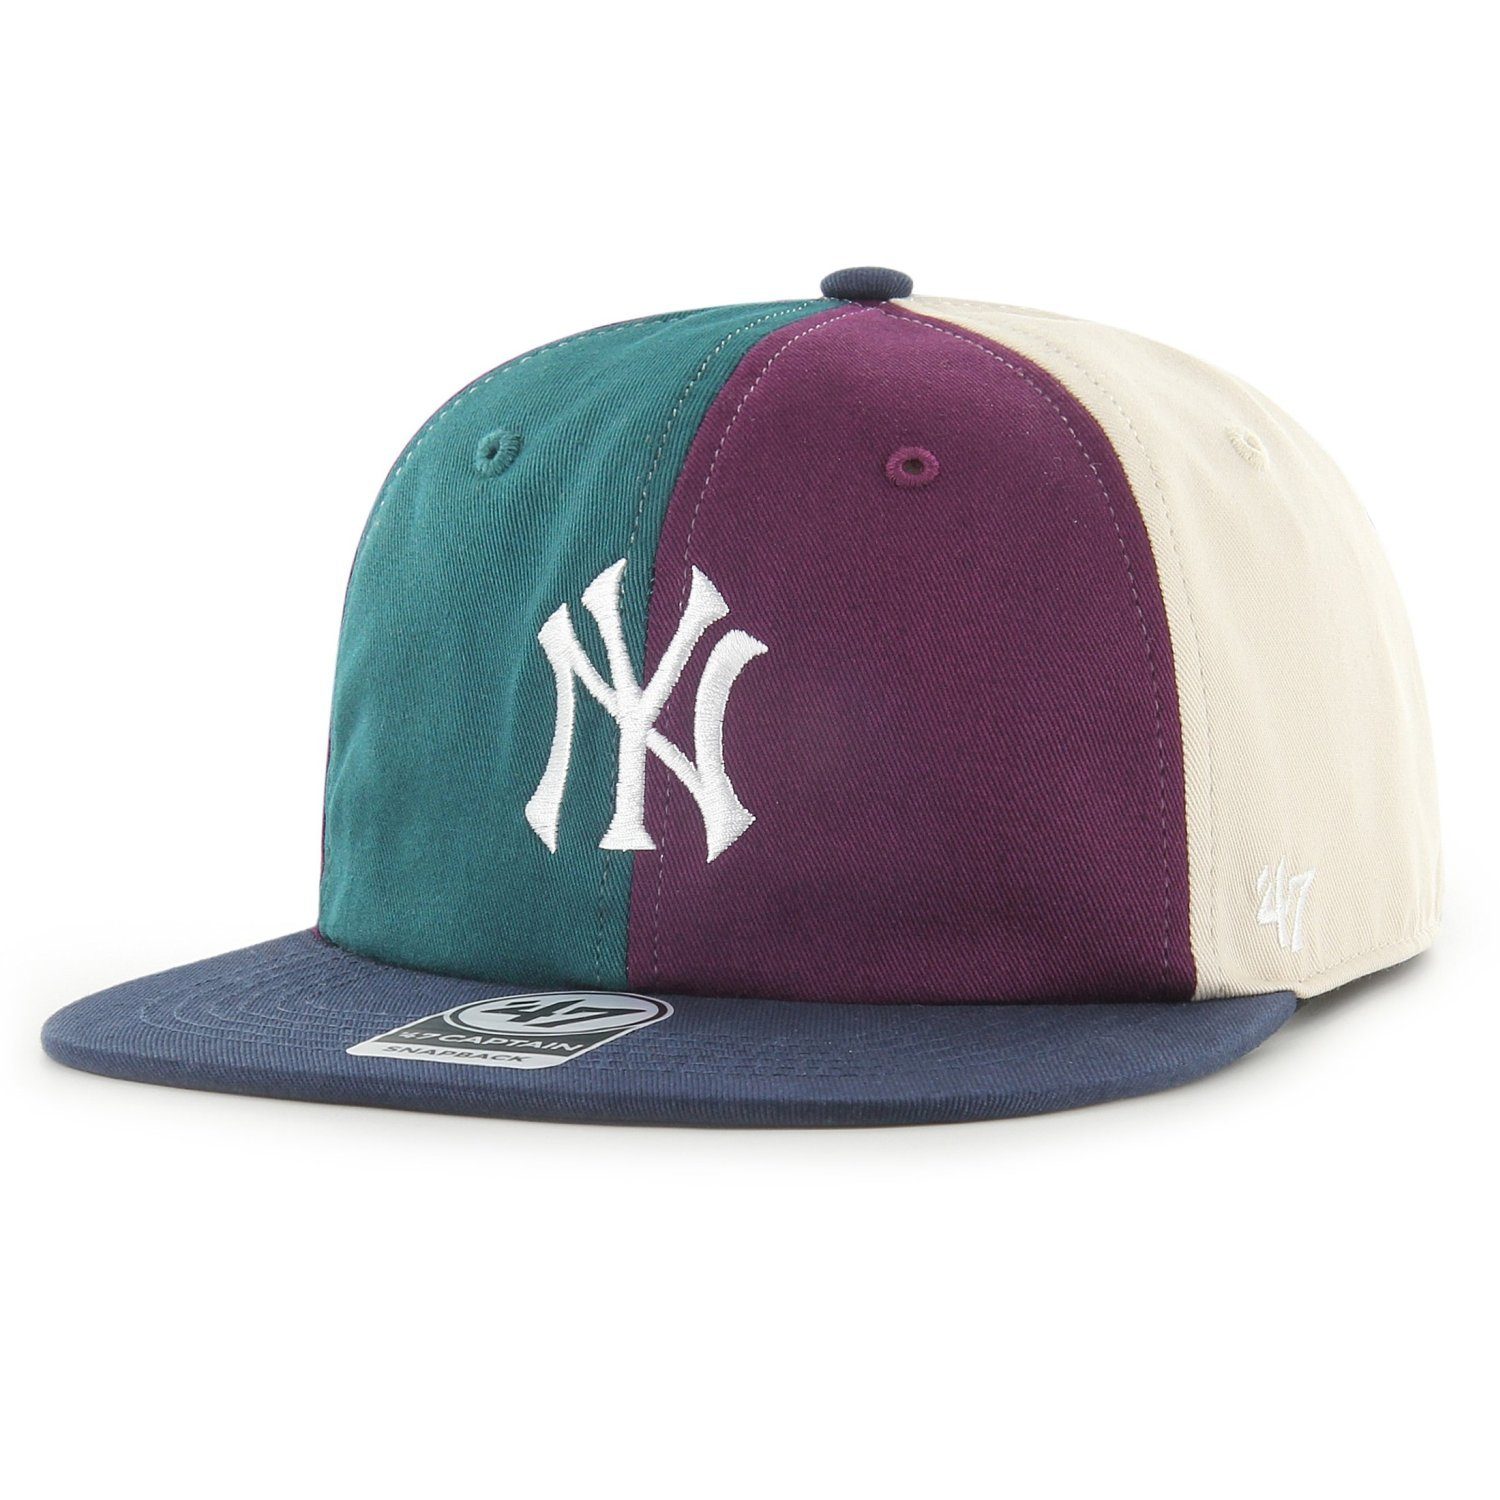 '47 Brand Snapback Cap Captain MELROSE New York Yankees